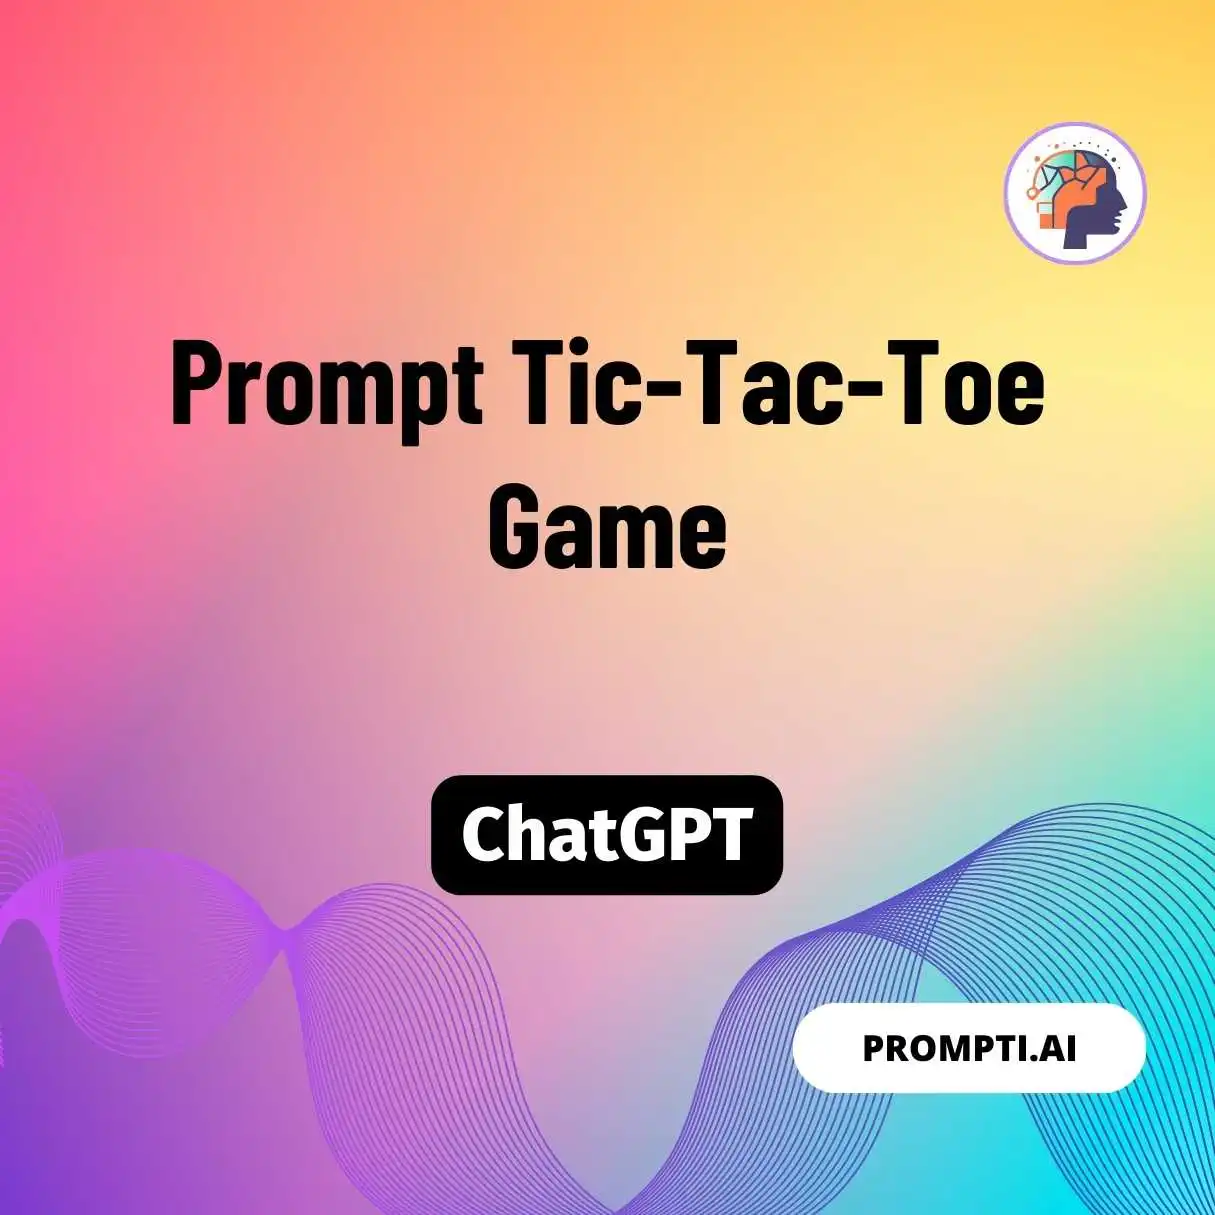 Prompt Tic-Tac-Toe Game